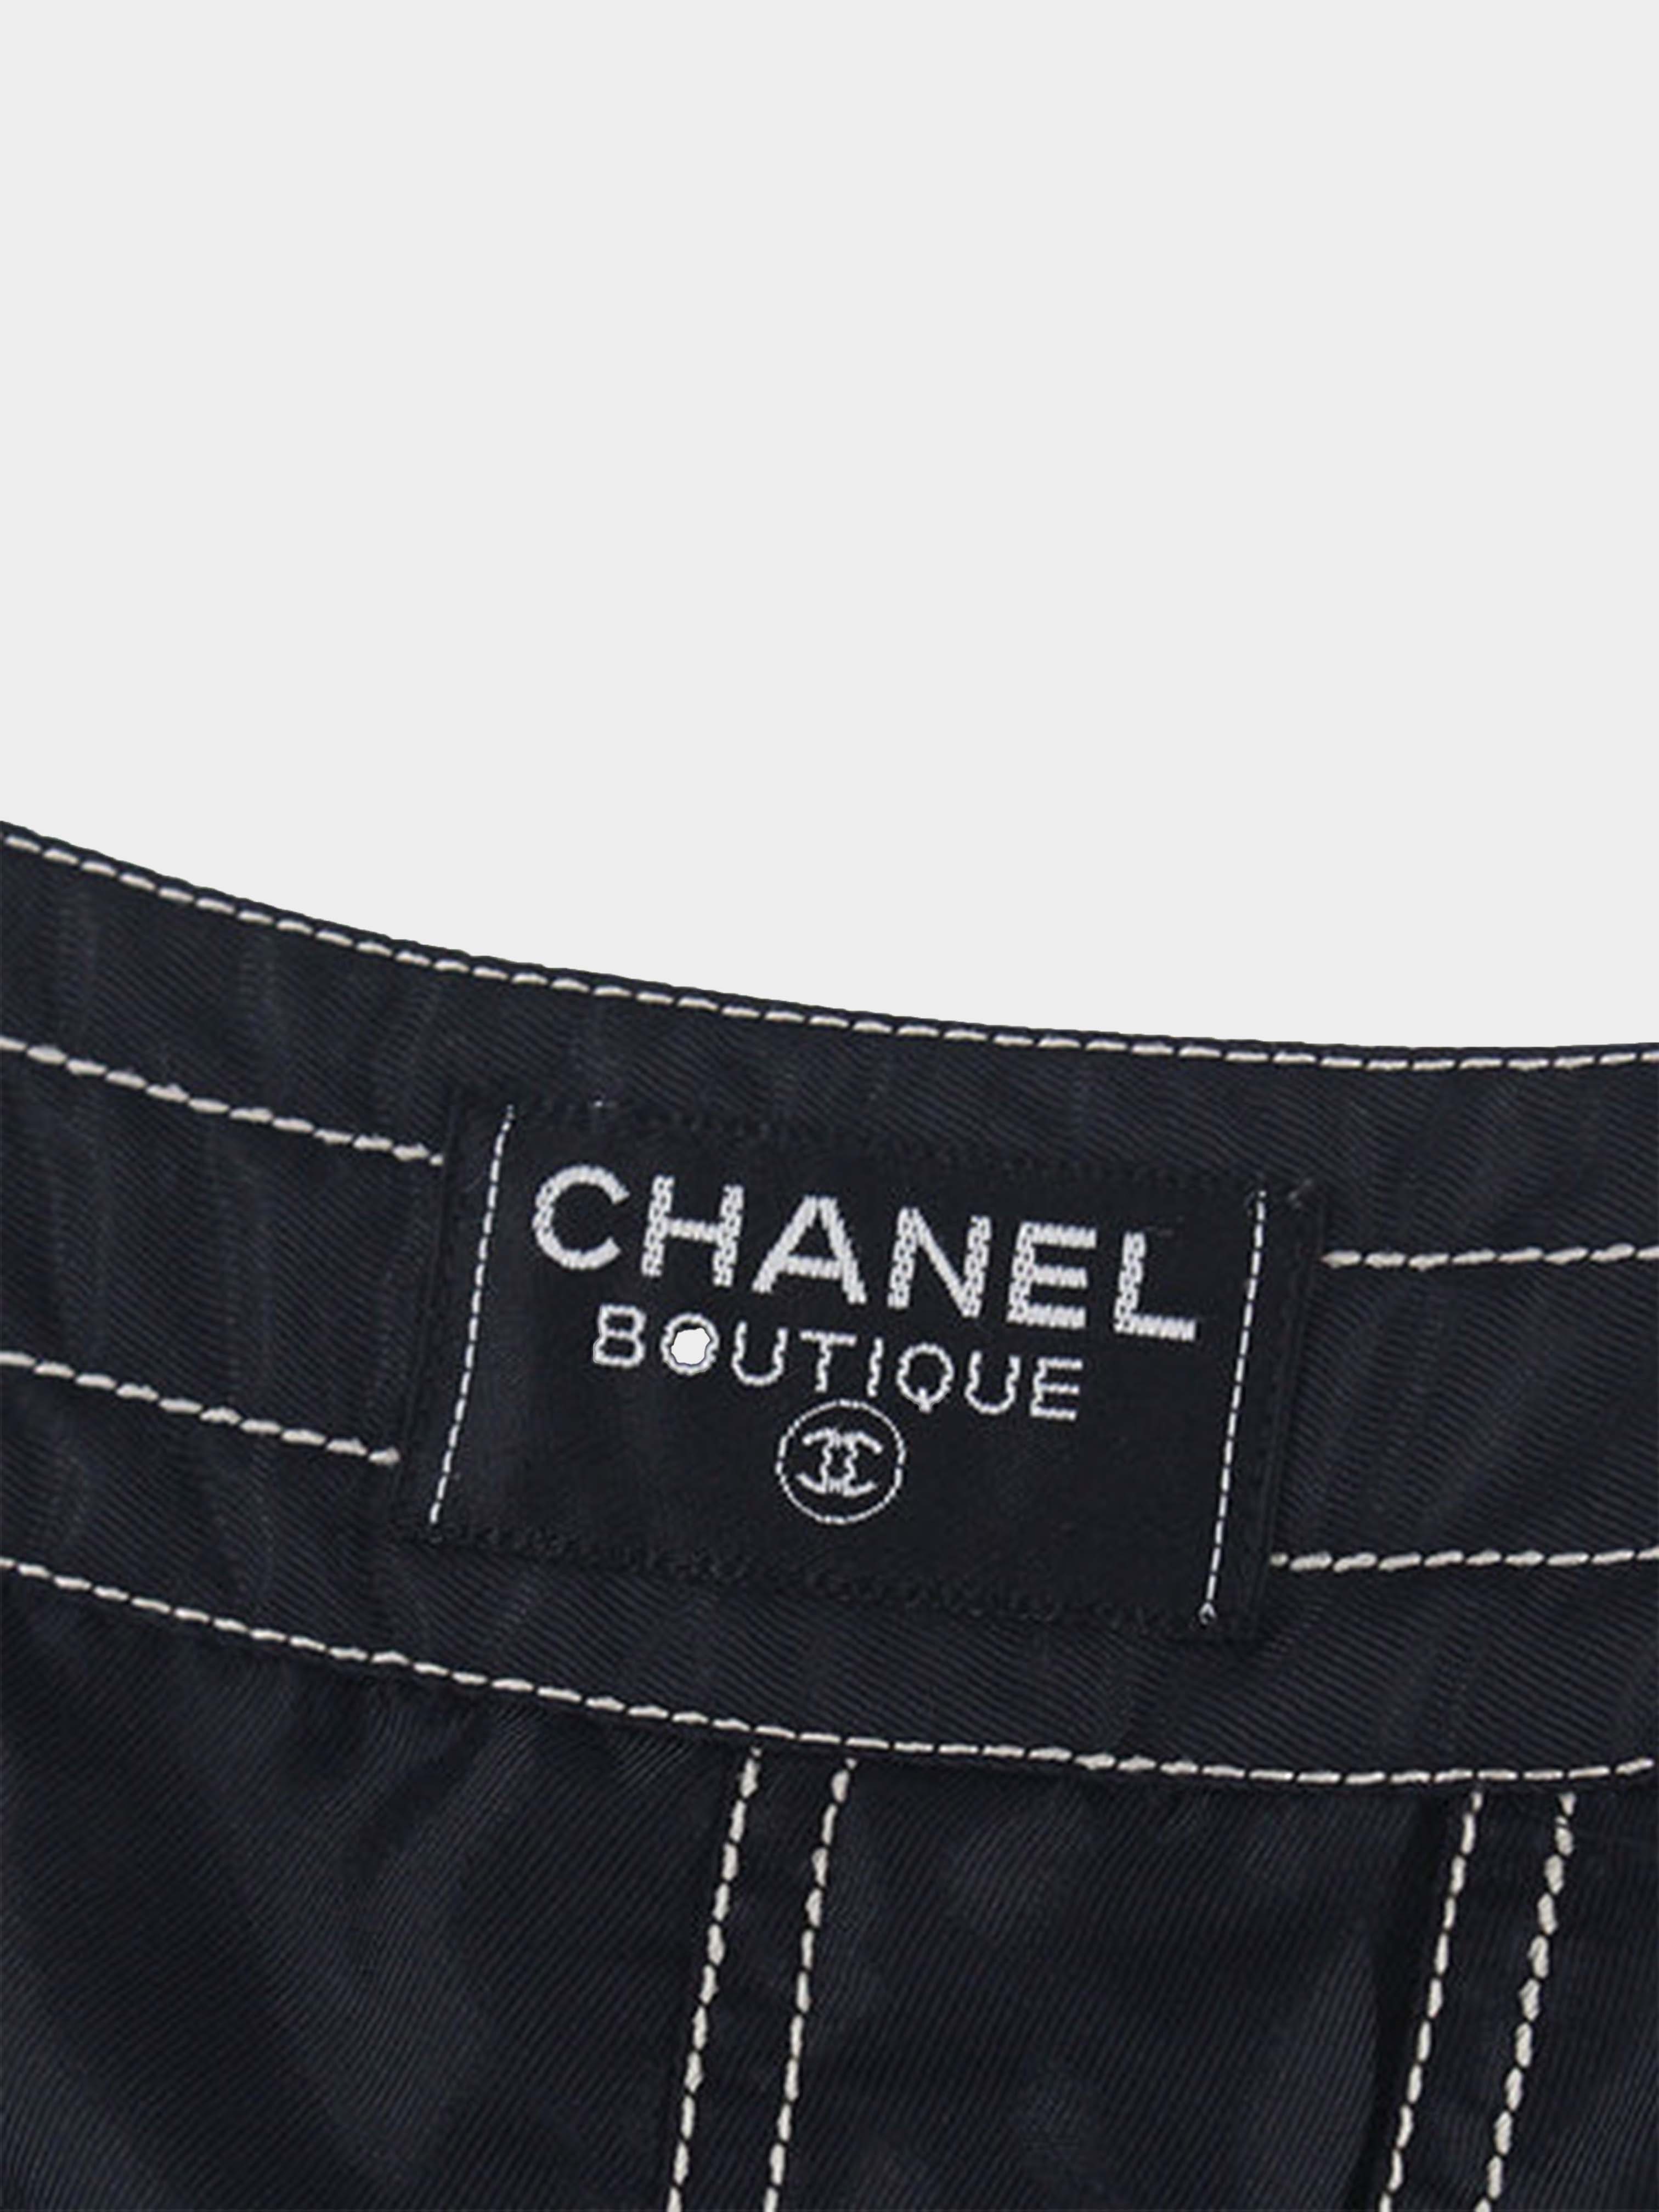 Chanel 1980s Black Contrast Stitch Shorts